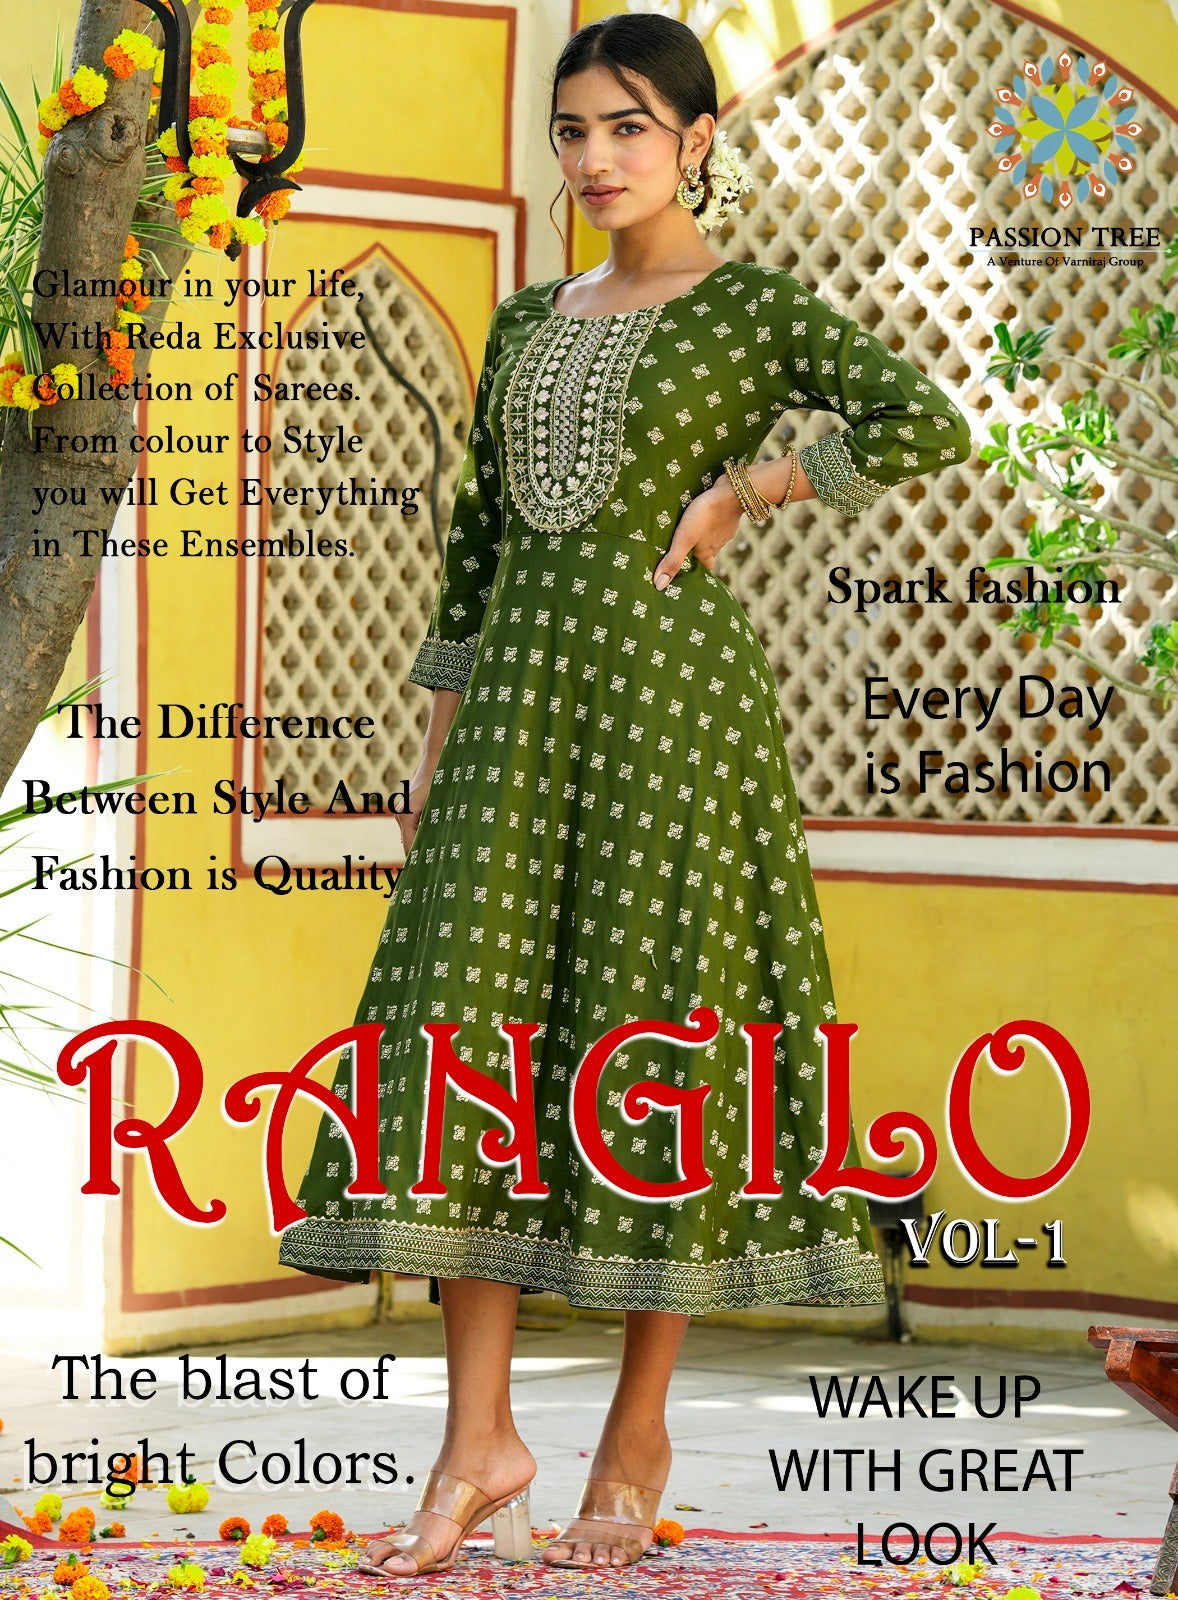 Rangilo Vol 1 Passion Tree Rayon One Piece